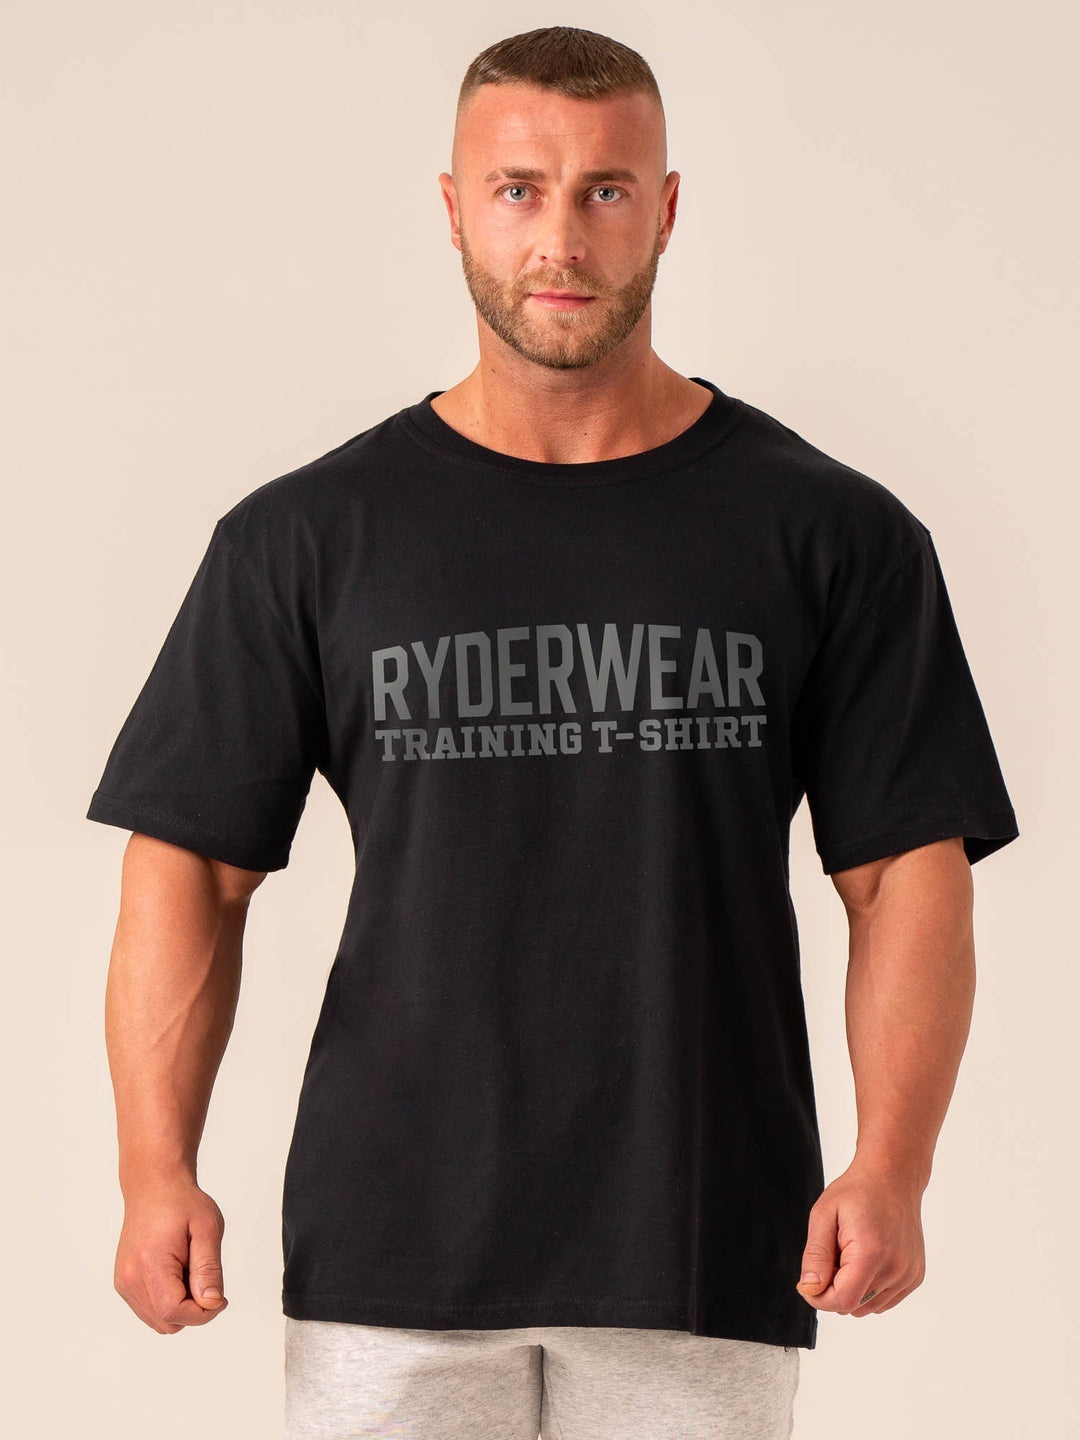 Ryderwear Training T-Shirt - Black Clothing Ryderwear 